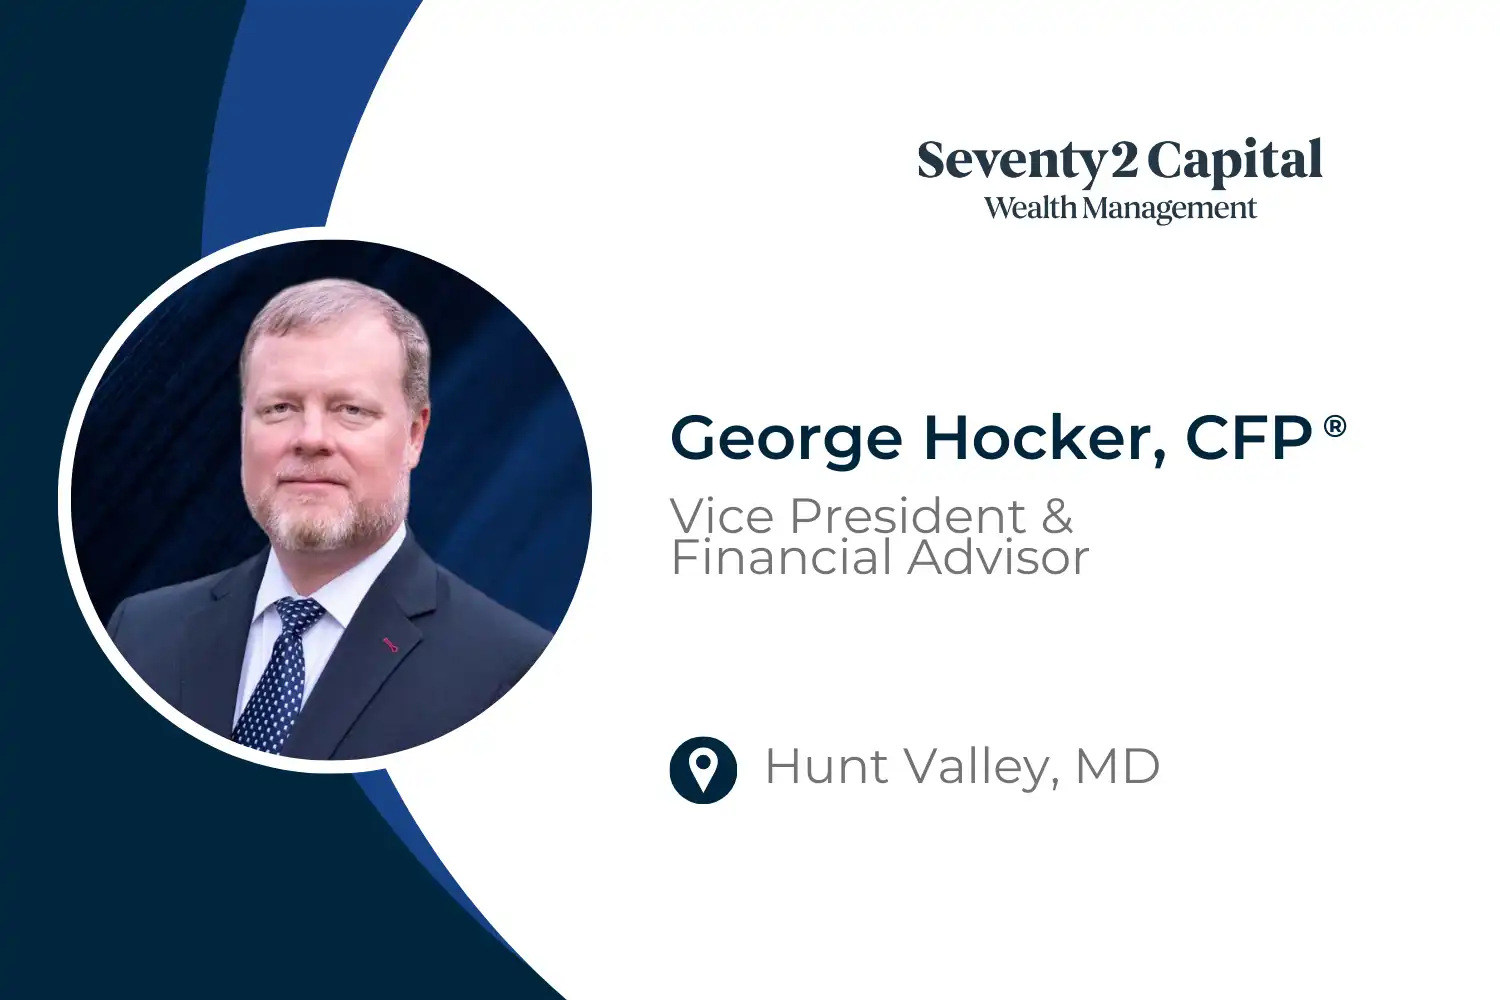 George H. Hocker, CFP® joins Seventy2 Capital Wealth Management as Vice President & Financial Advisor